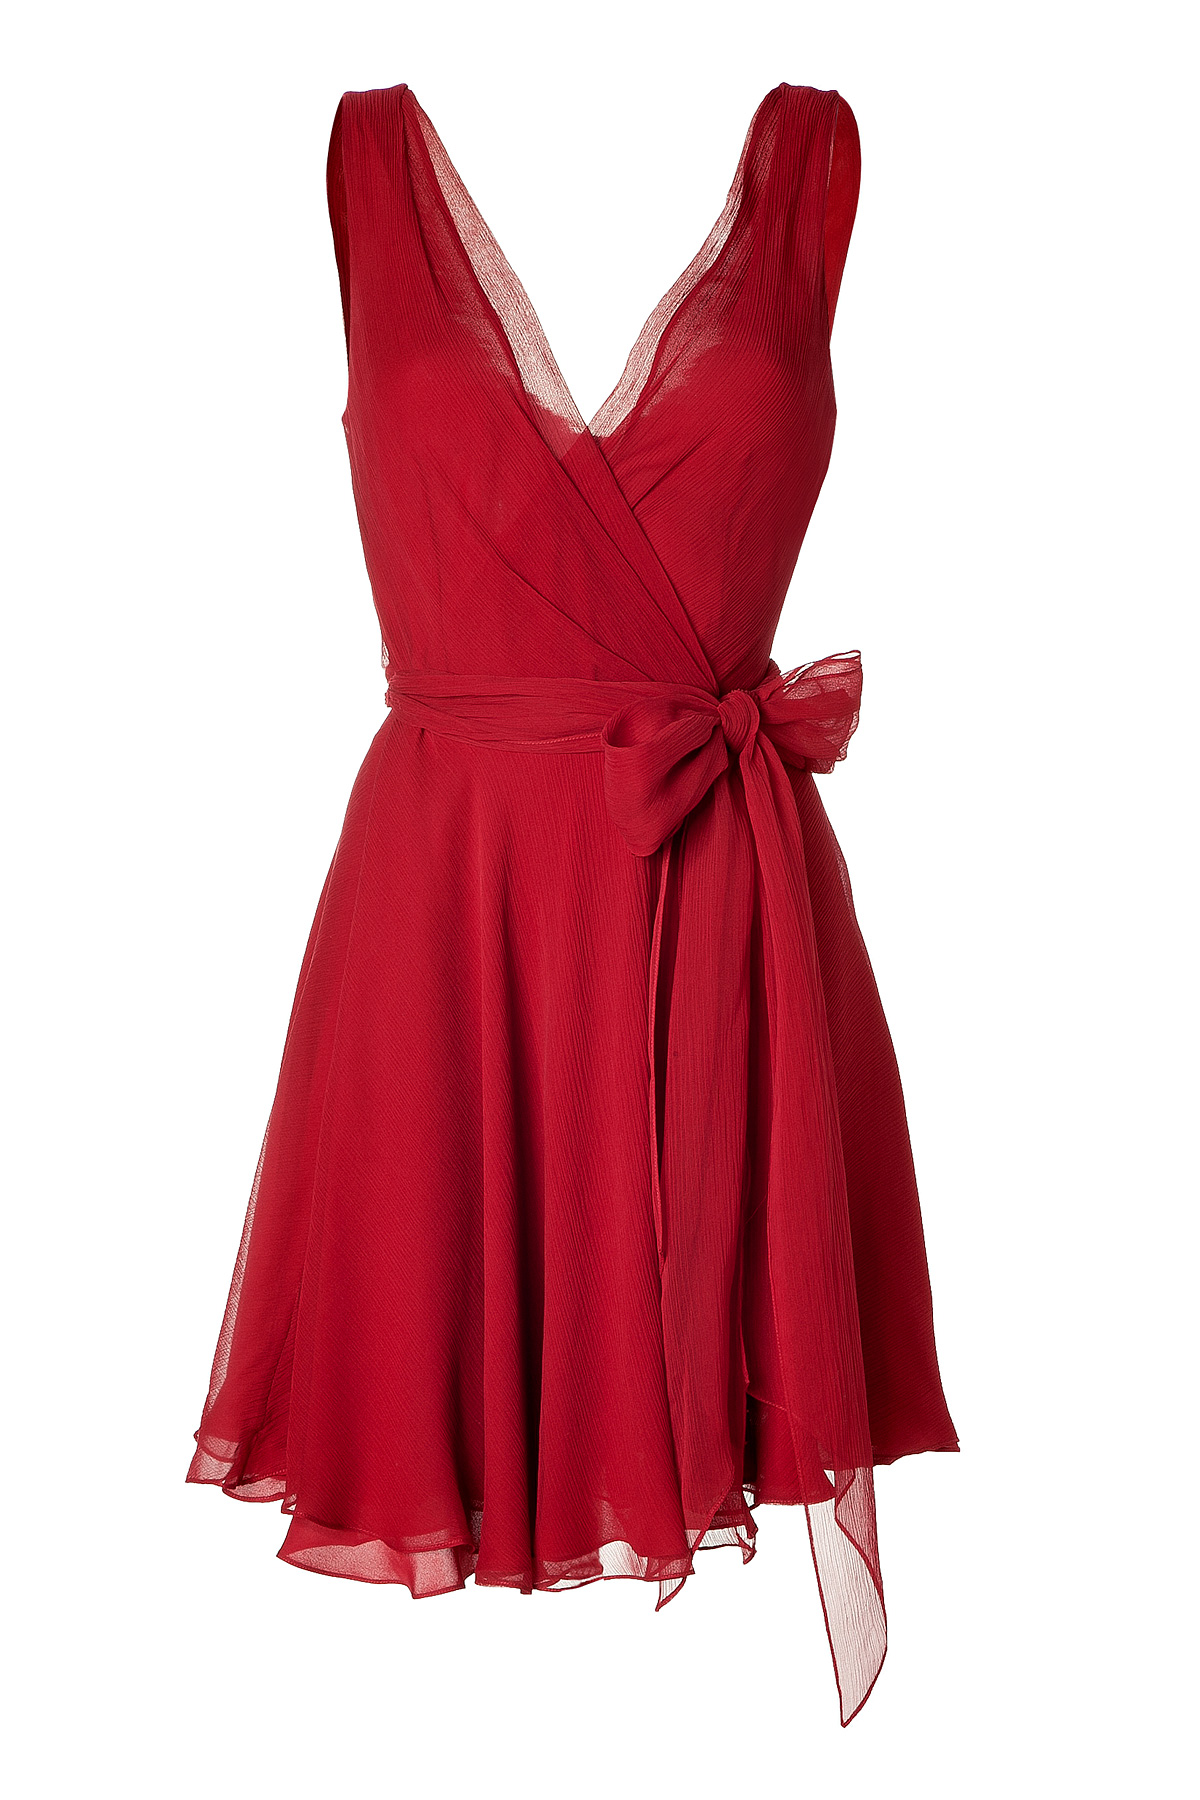 Ralph Lauren Parisian Red Crinkle Silk Chiffon Jeanette Dress in Red - Lyst